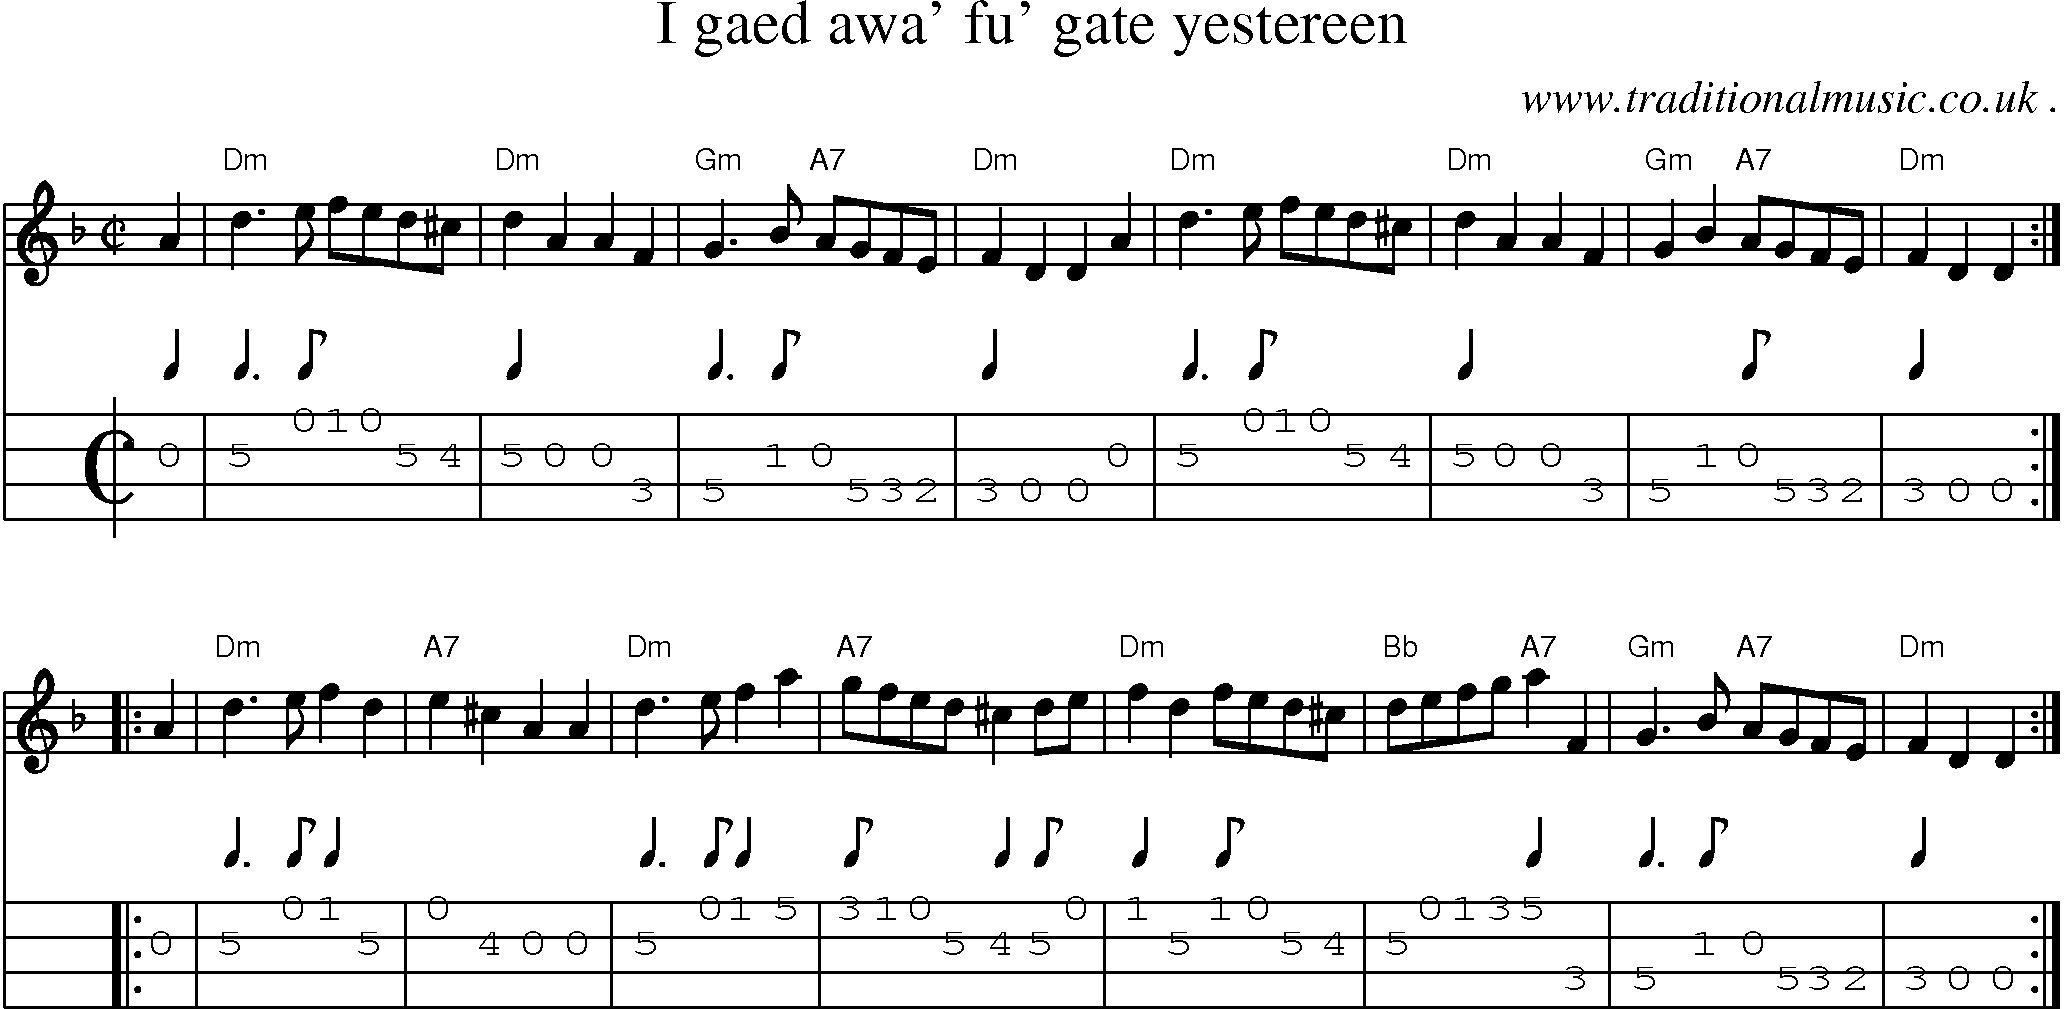 Sheet-music  score, Chords and Mandolin Tabs for I Gaed Awa Fu Gate Yestereen